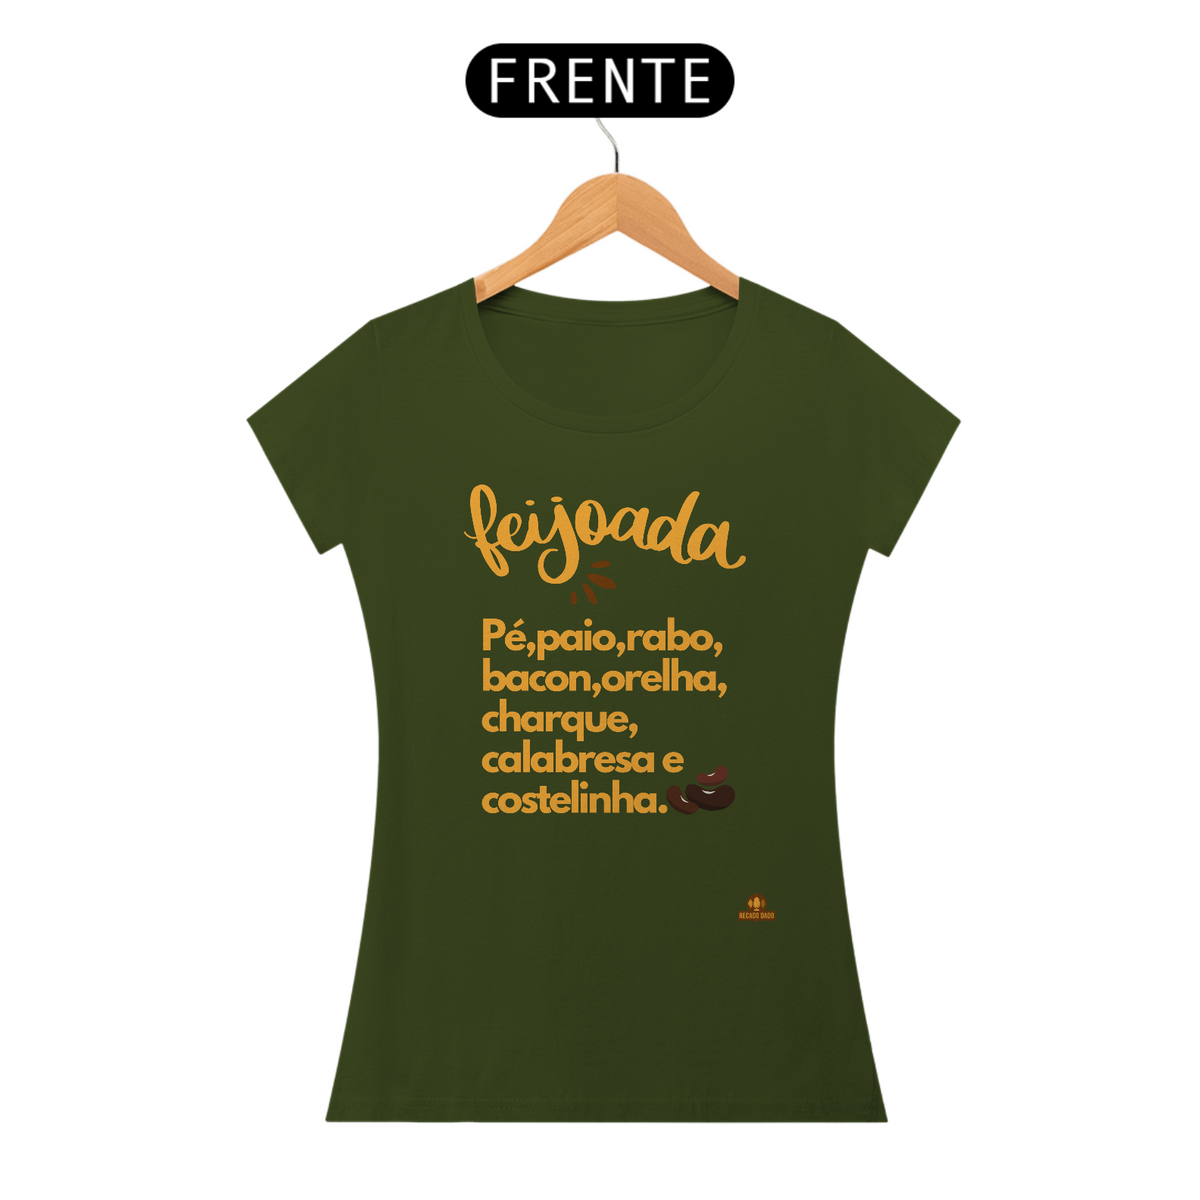 Nome do produto: Camiseta Ingredientes da feijoada, descrevendo os principais ingredientes de uma deliciosa feijoada.